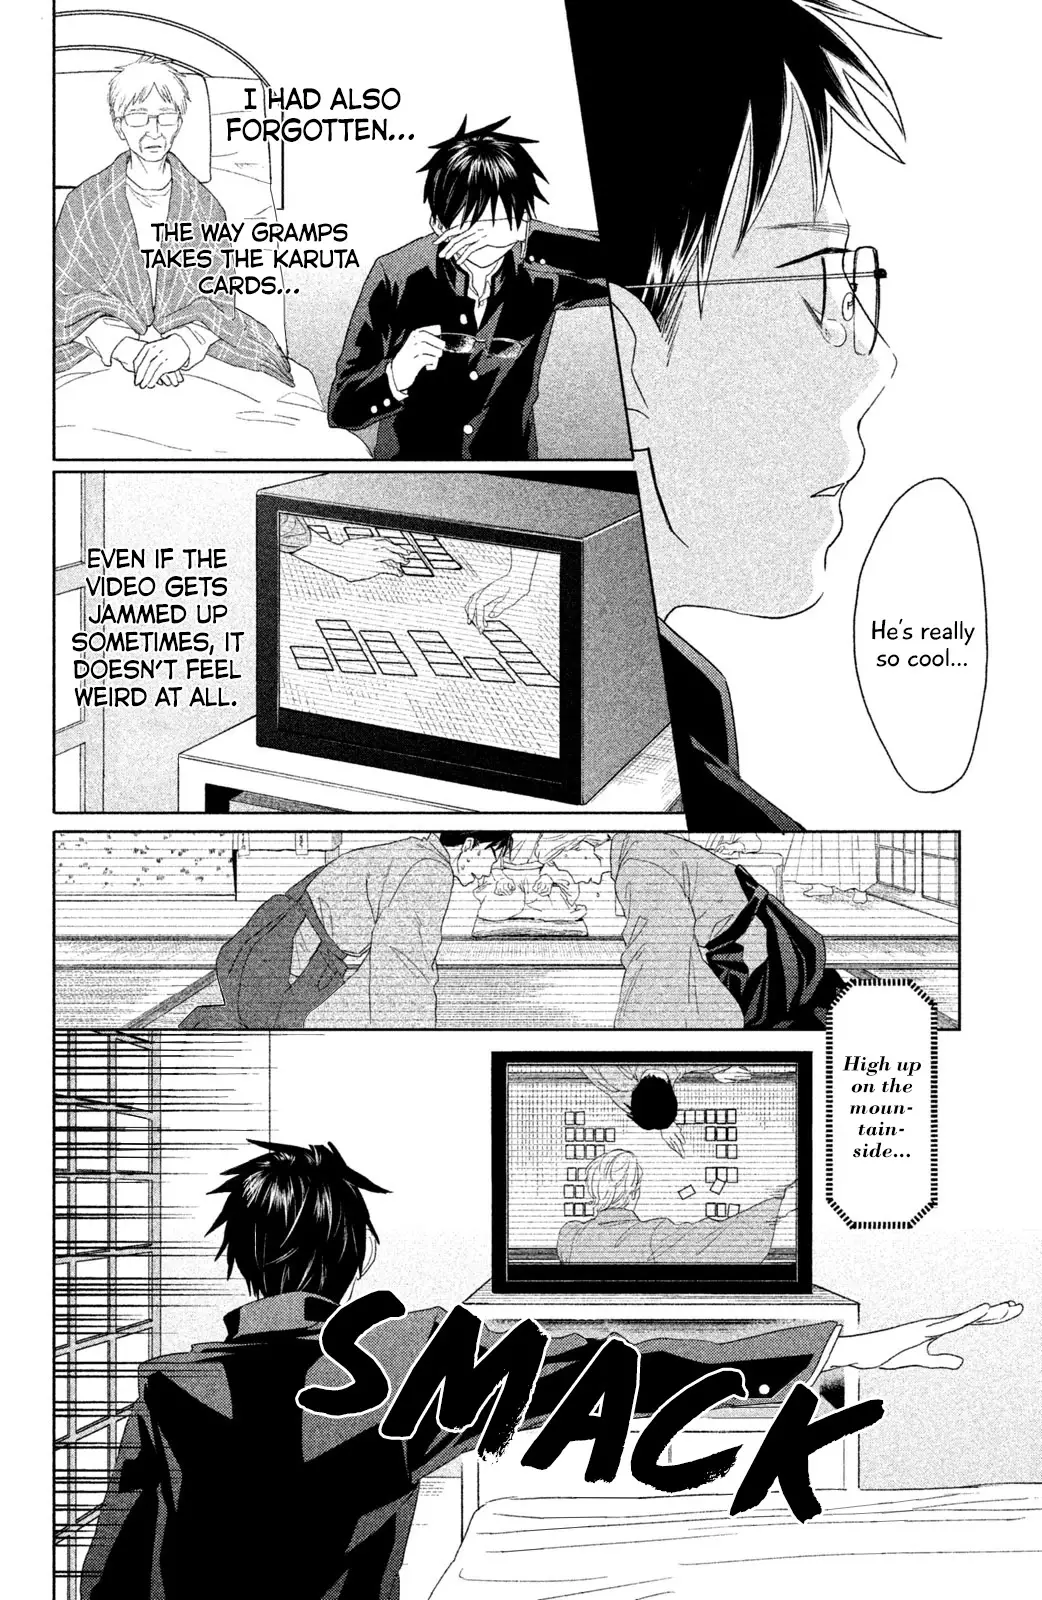 Chihayafuru: Middle School Arc - 9 page 7